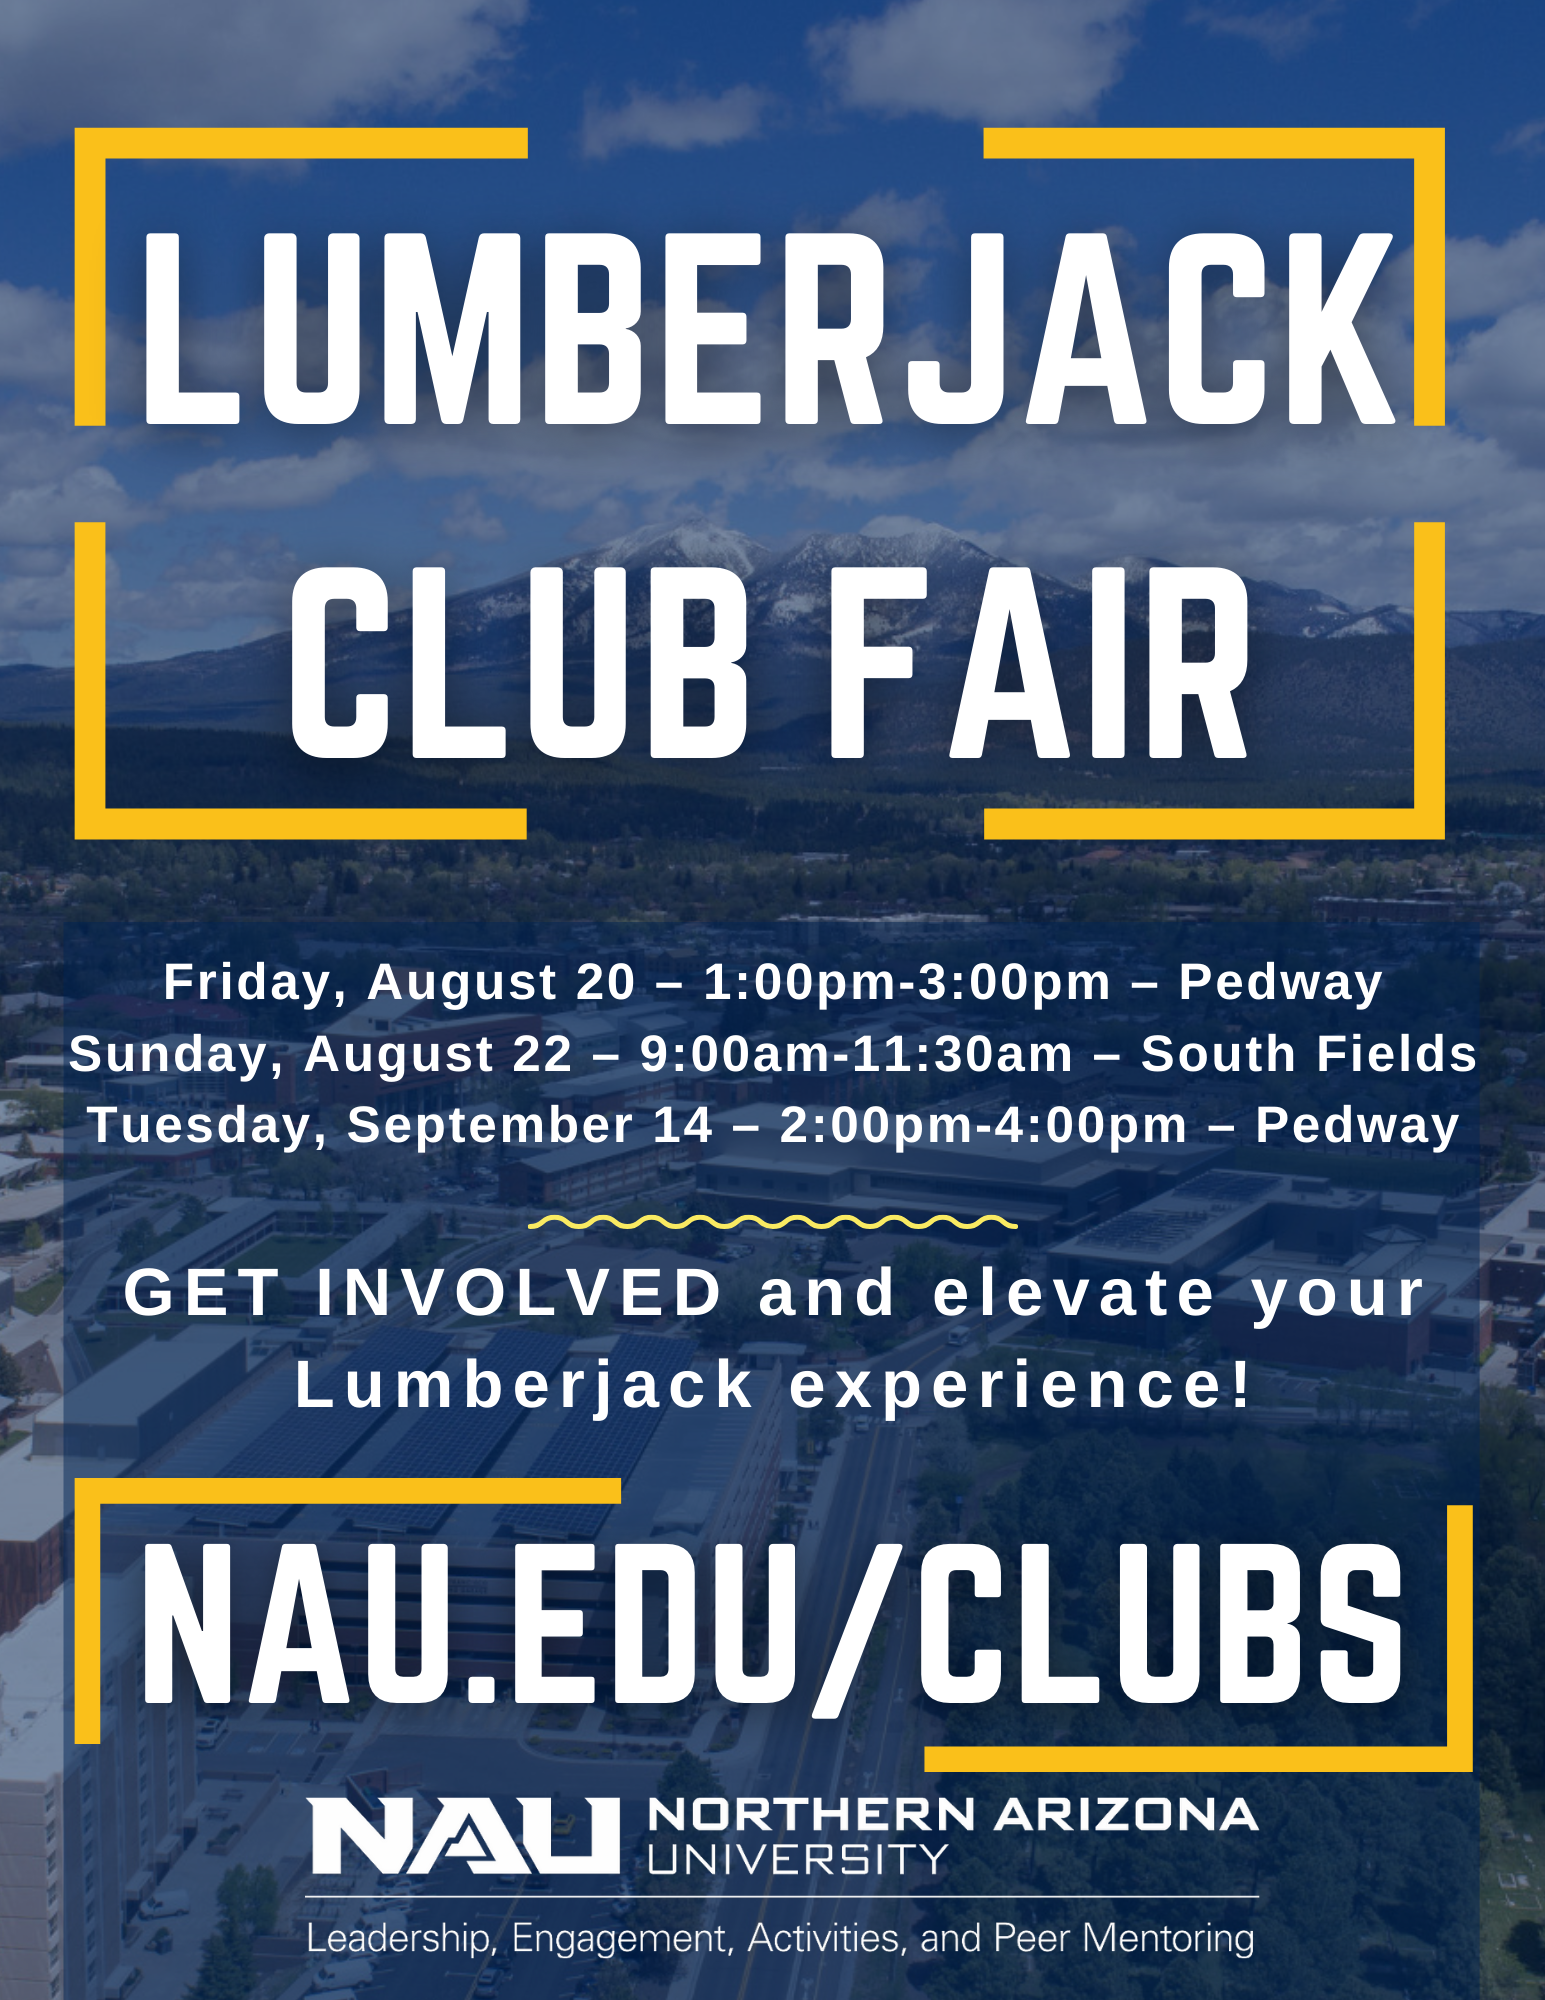 Lumberjackclub fair.png